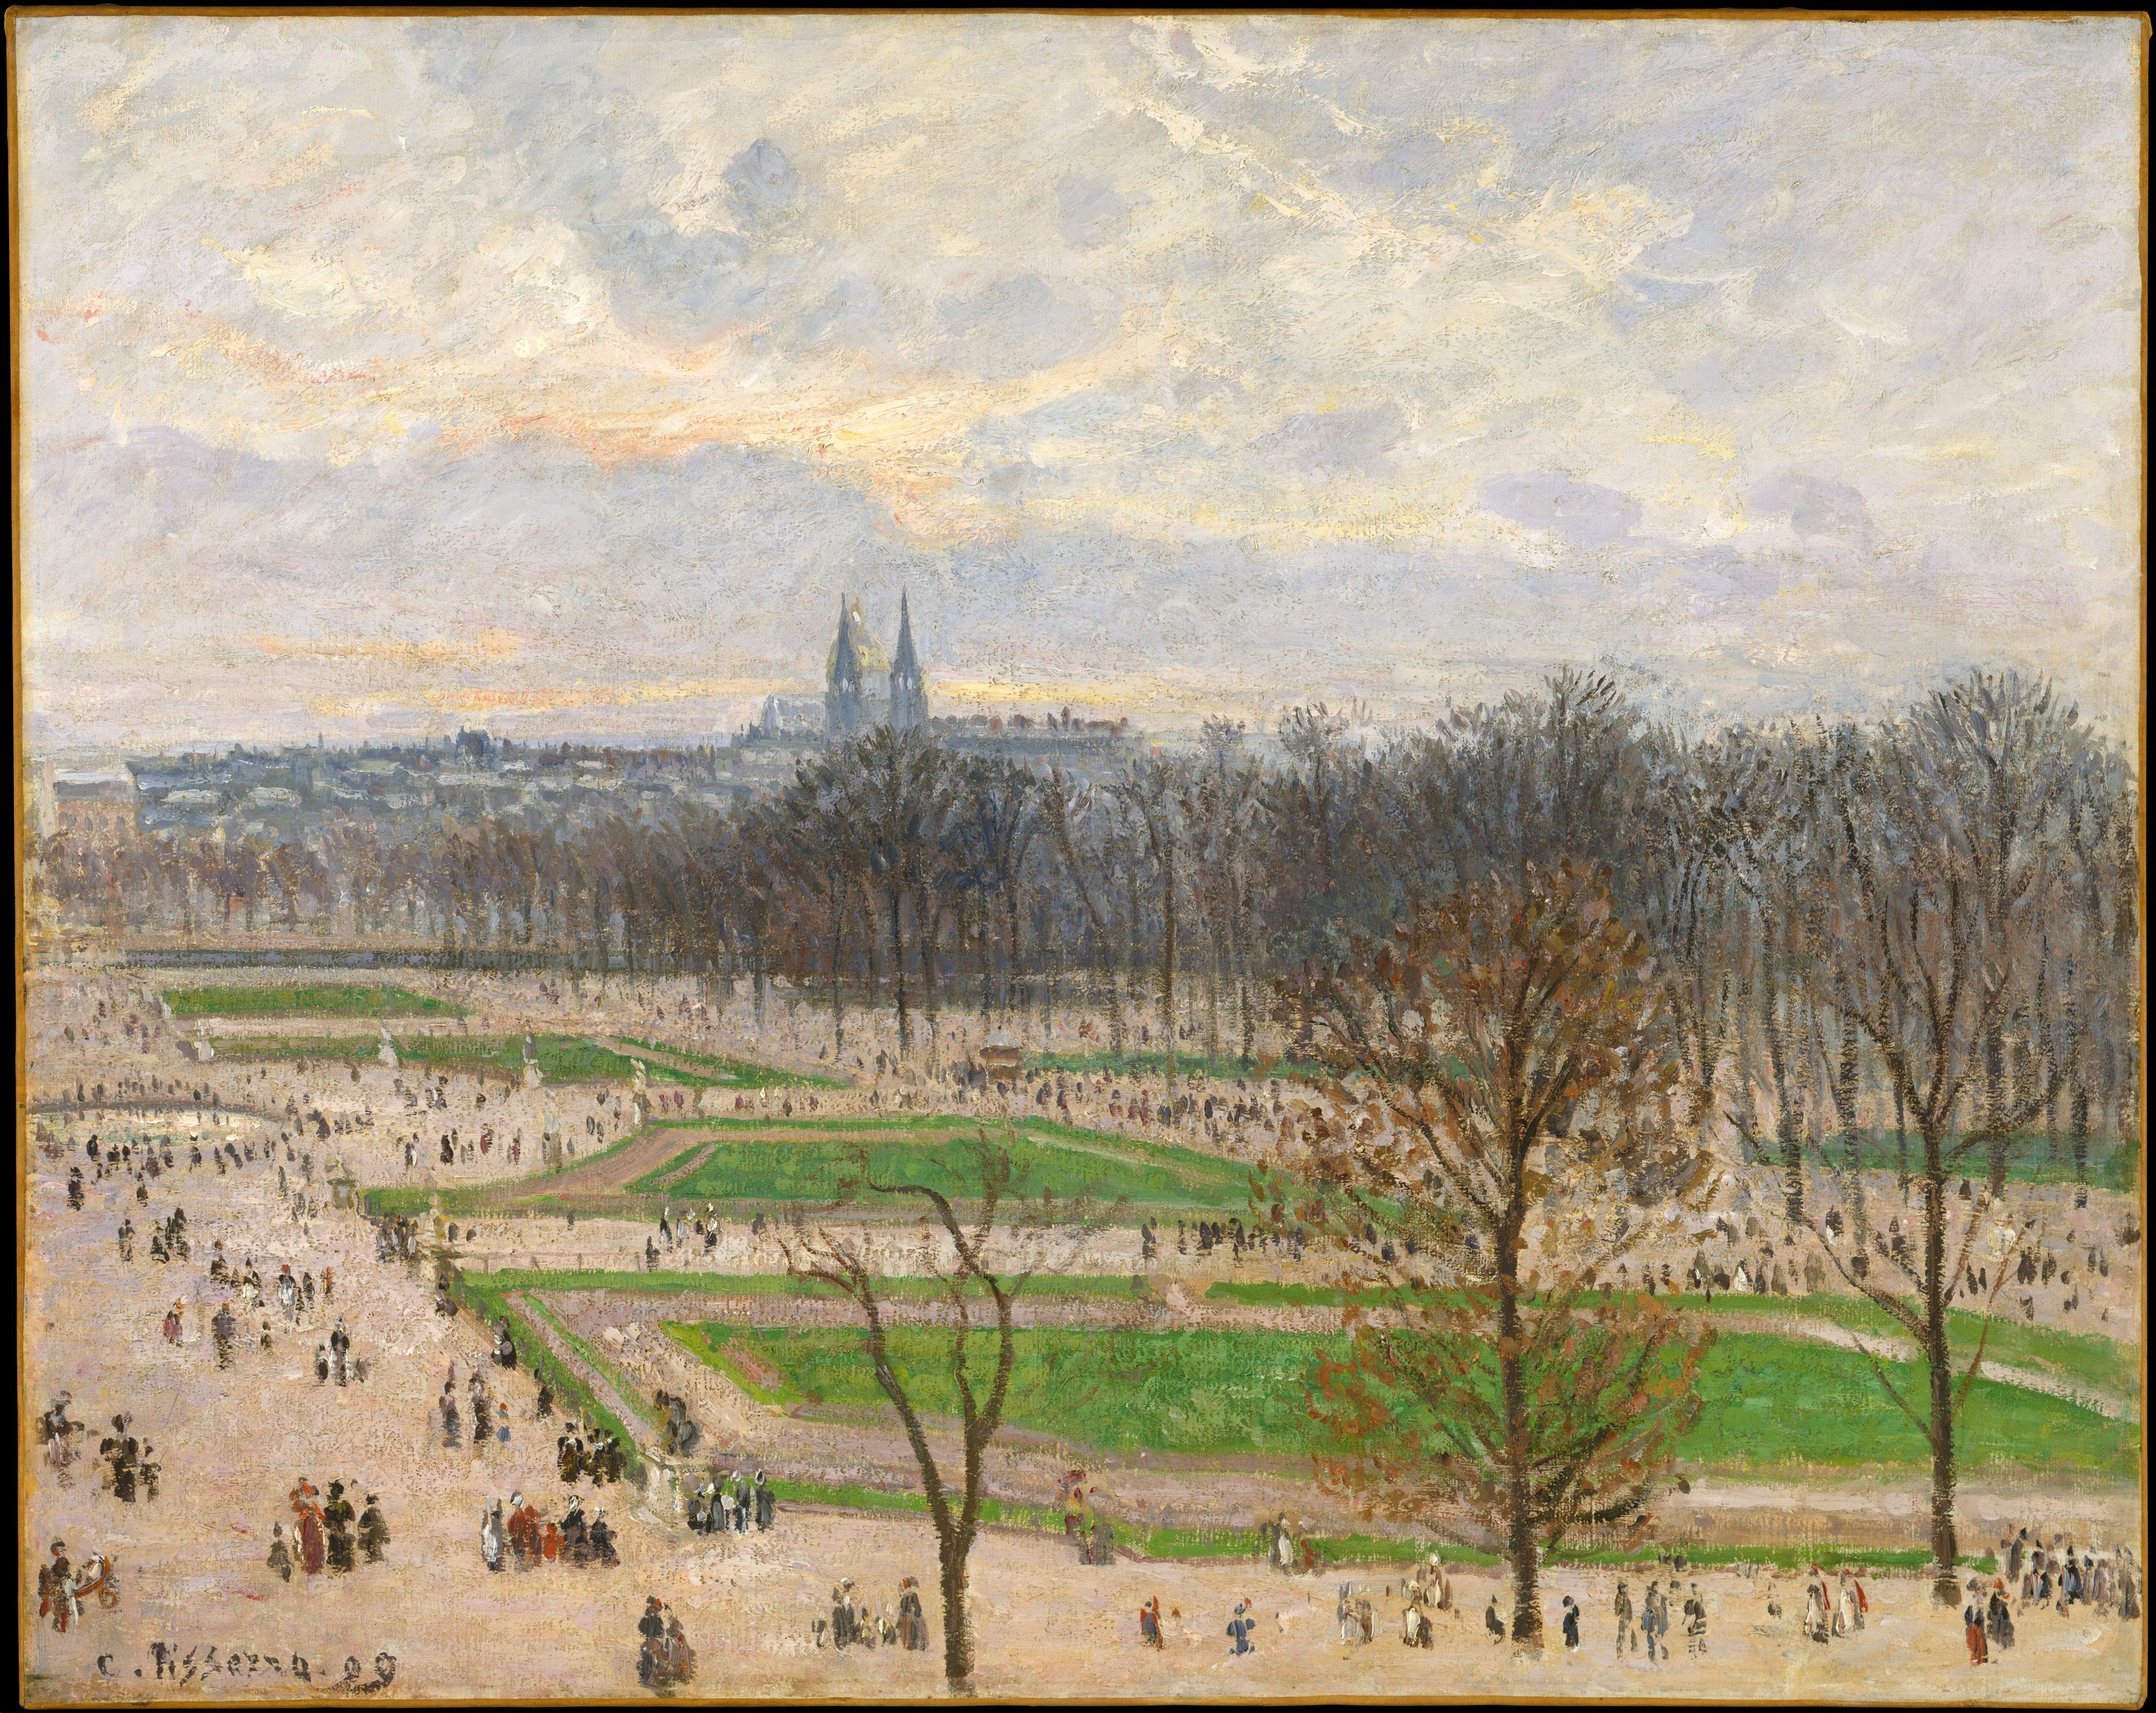 The Metropolitan Museum: A Window into the Art of Paris